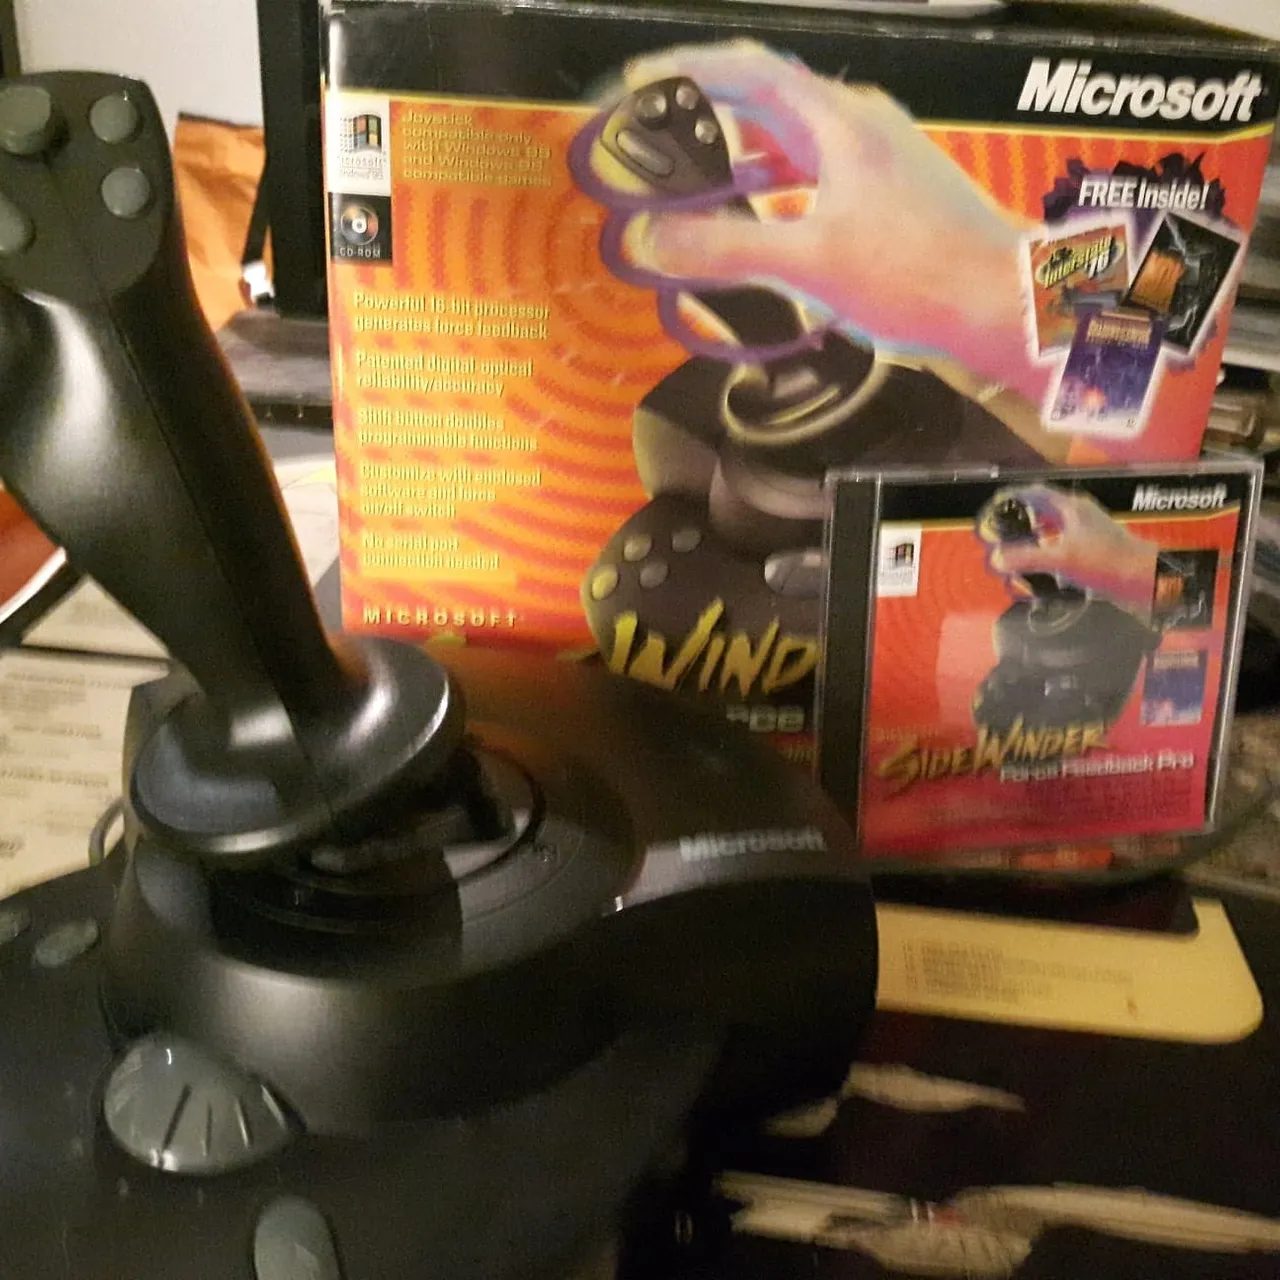 Microsoft Sidewinder Pro Force Feedback joystick photo 1